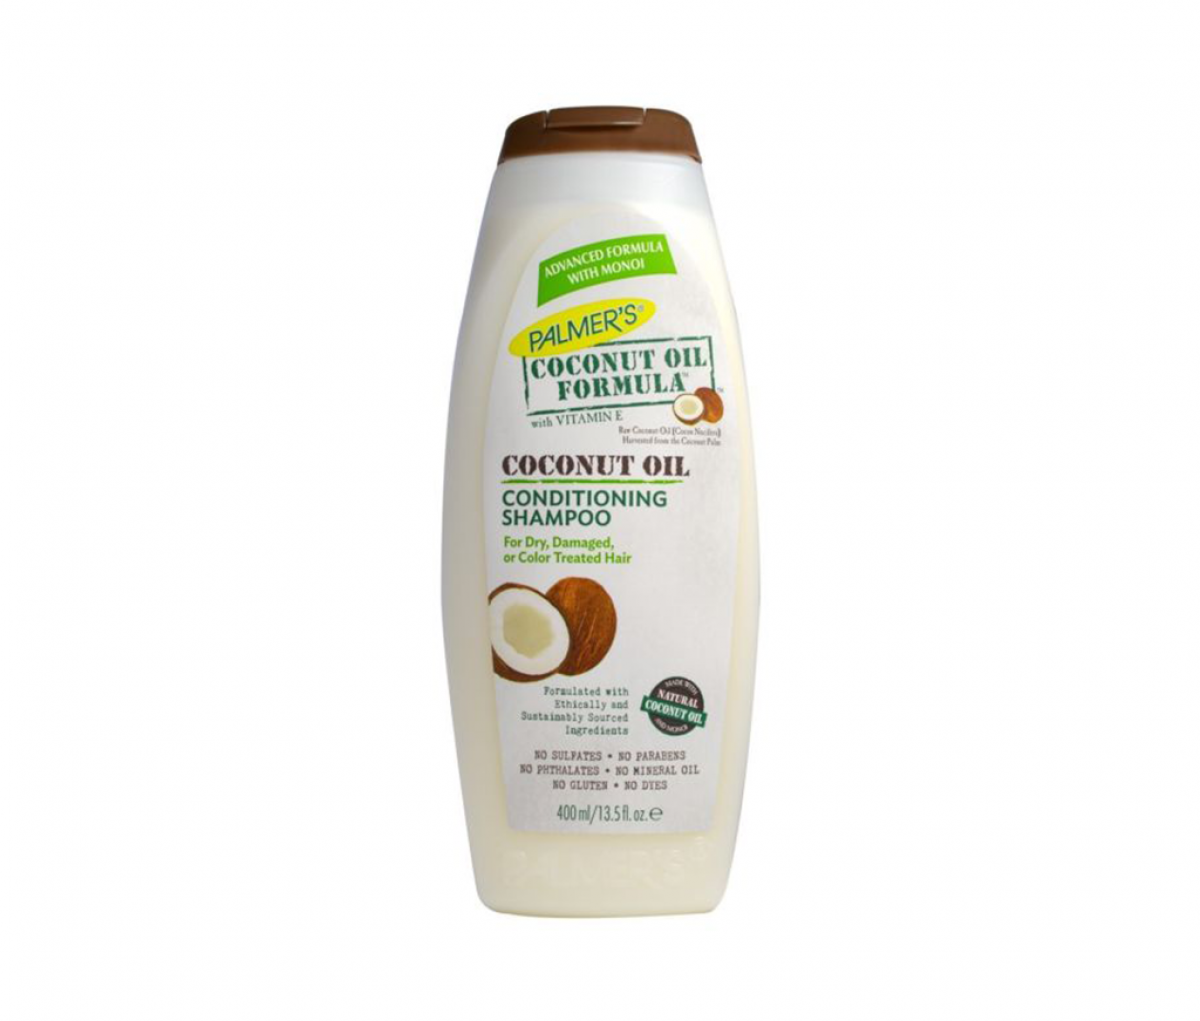 Palmers coconut oil formula shampoo 